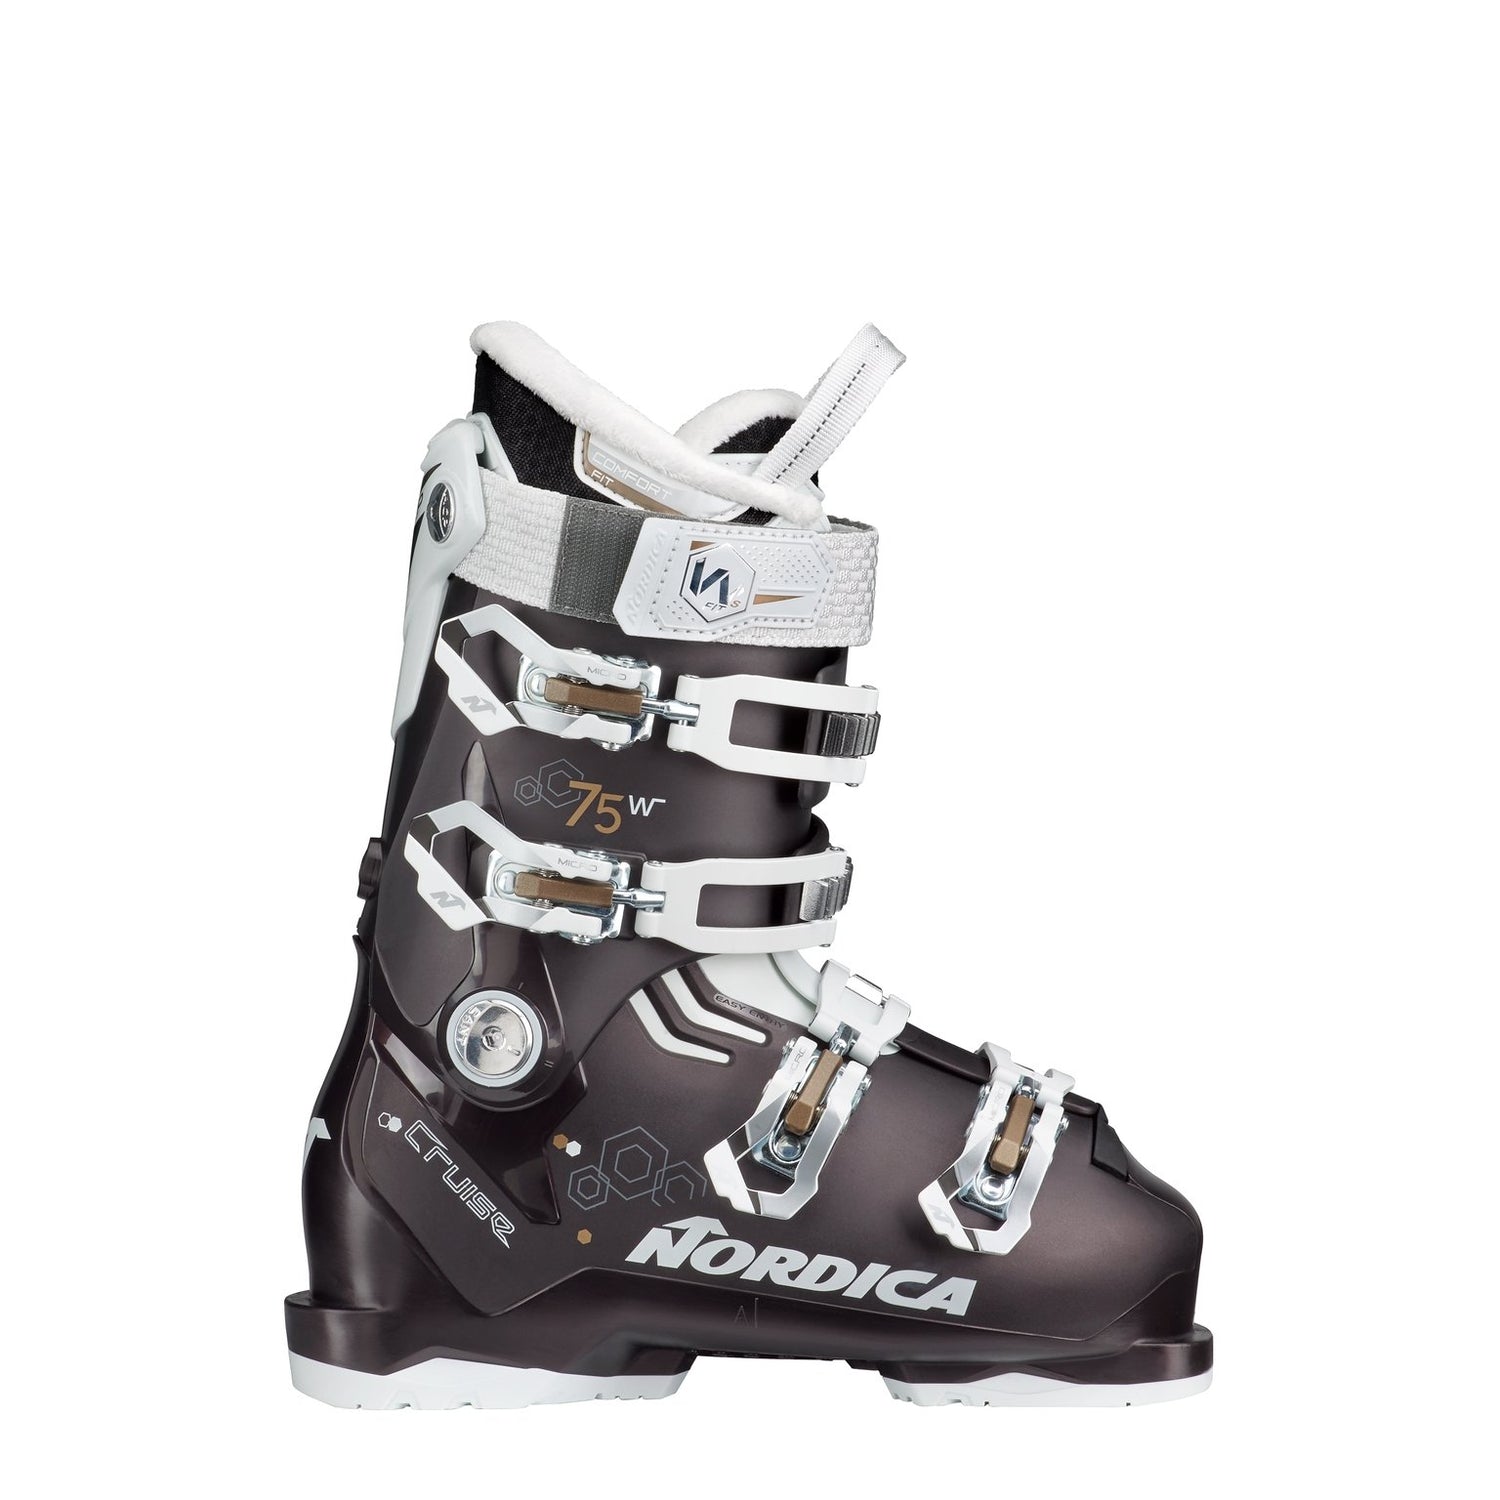 Nordica The Cruise 75 W 2022 Womens Ski Boots - Snowride Sports